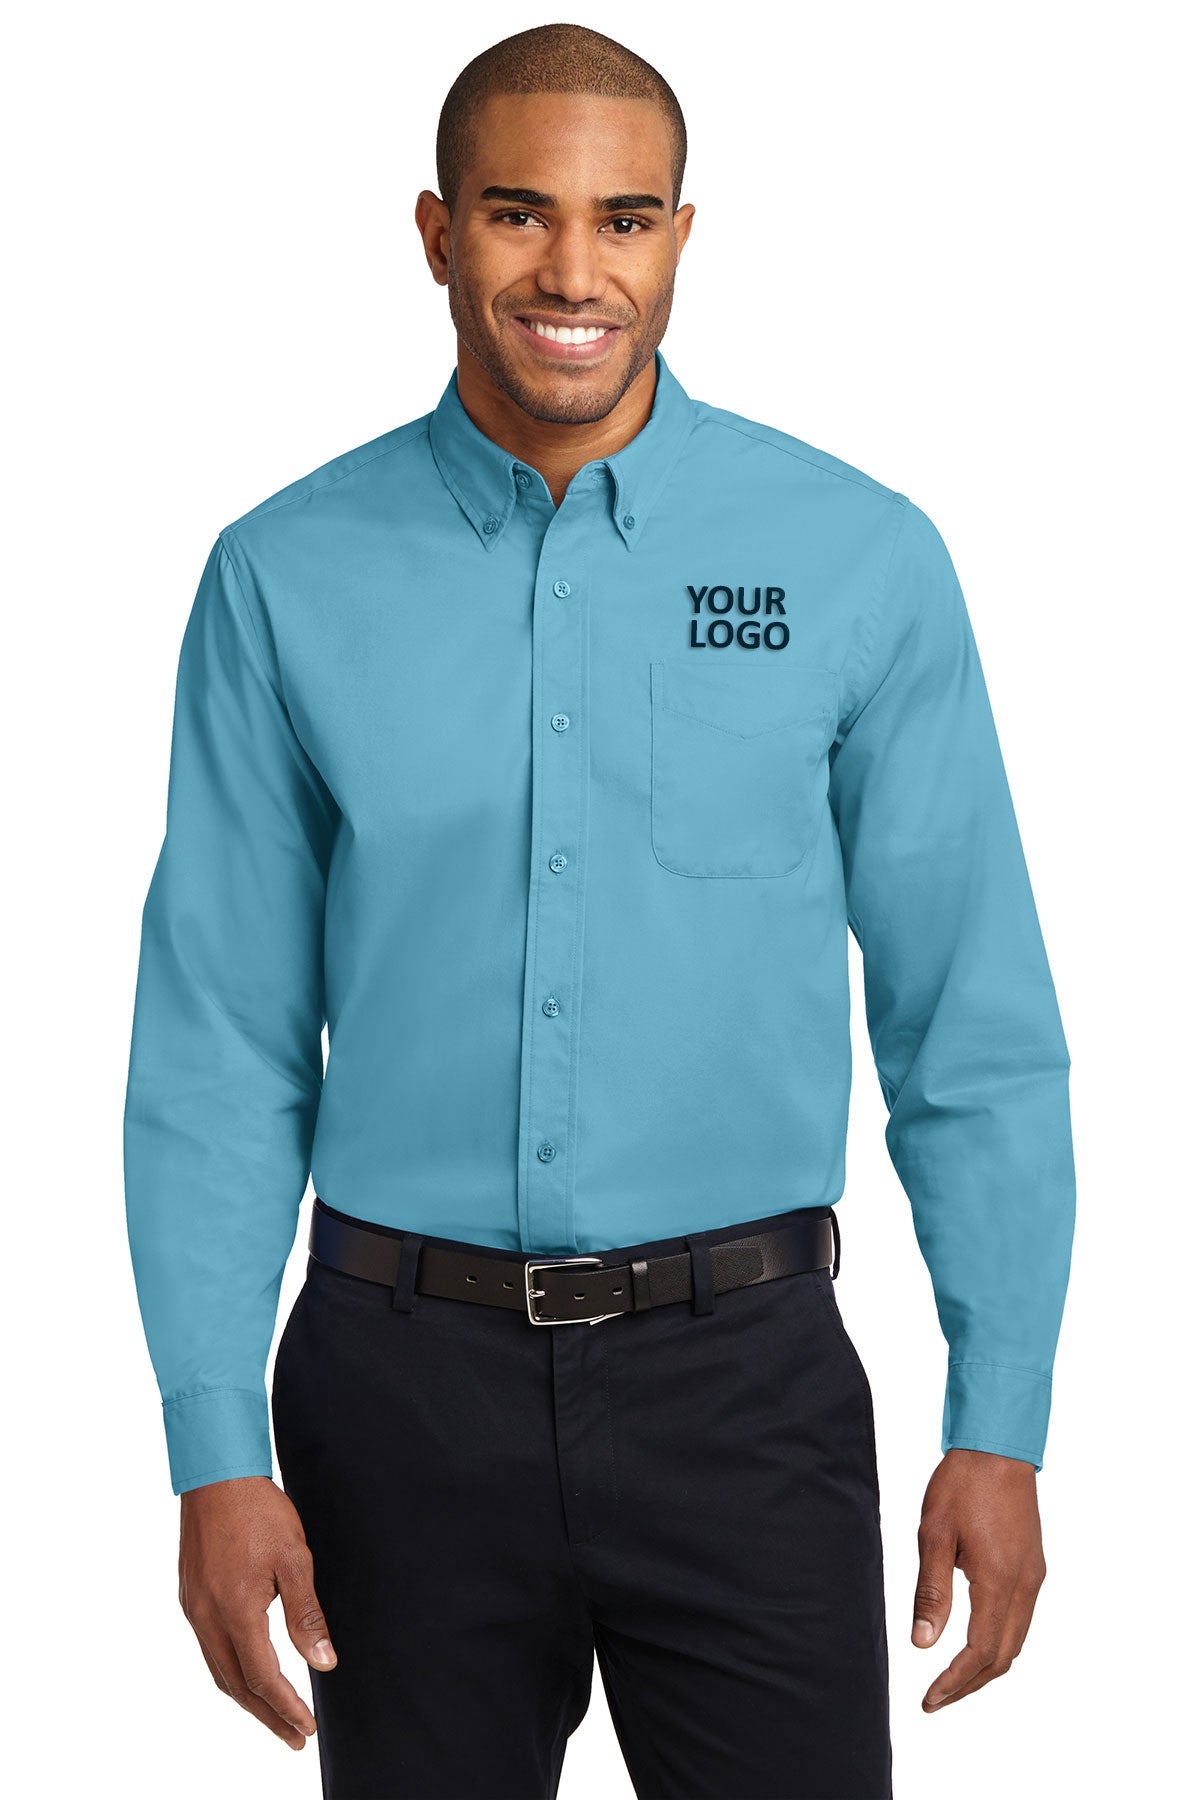 Port Authority Maui Blue S608ES business shirts with company logo